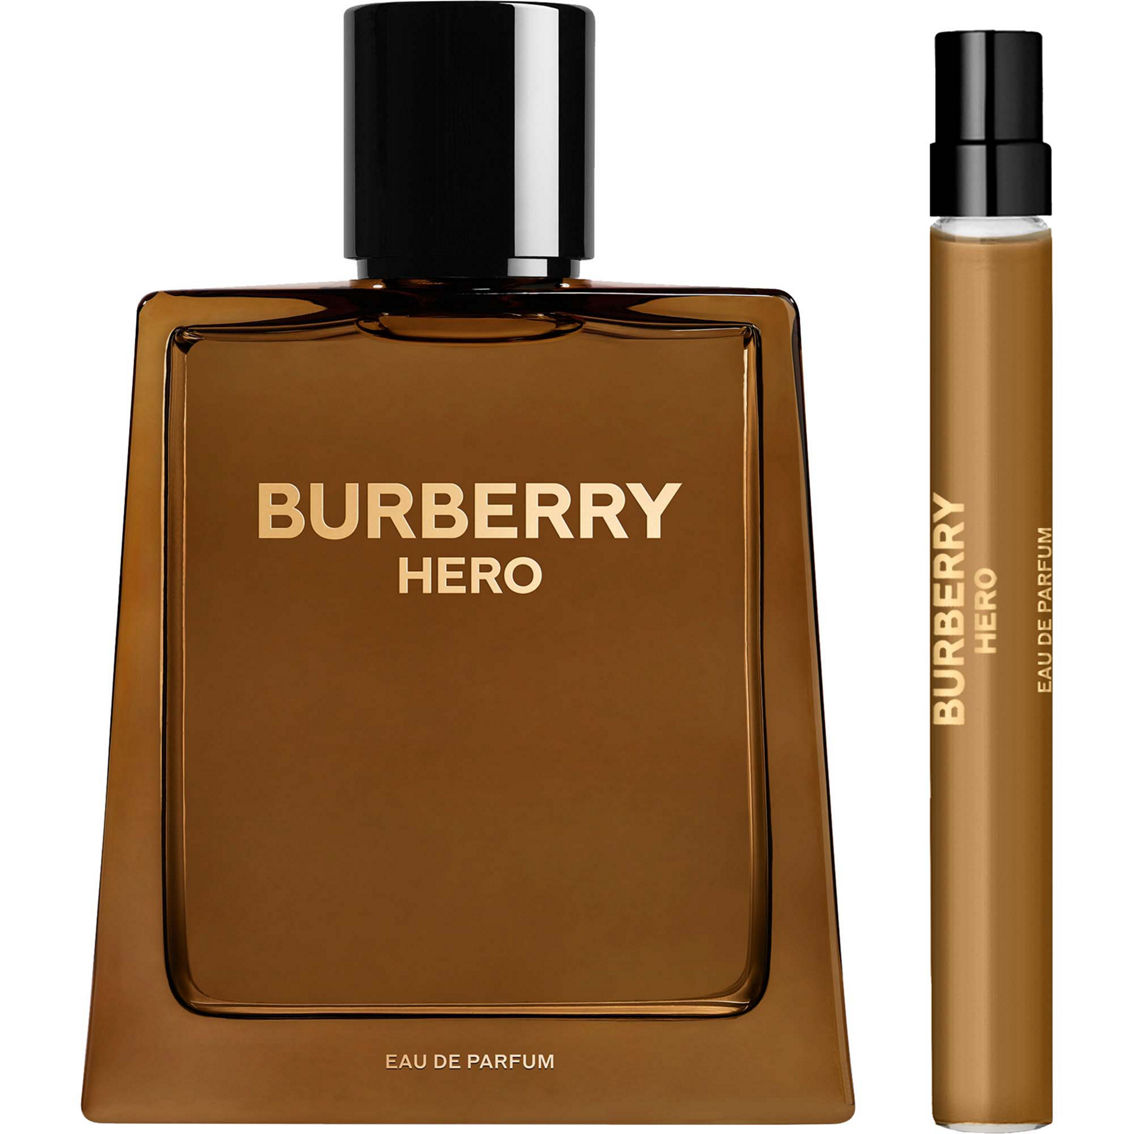 Burberry Hero Eau de Parfum Gift Set - Image 2 of 2